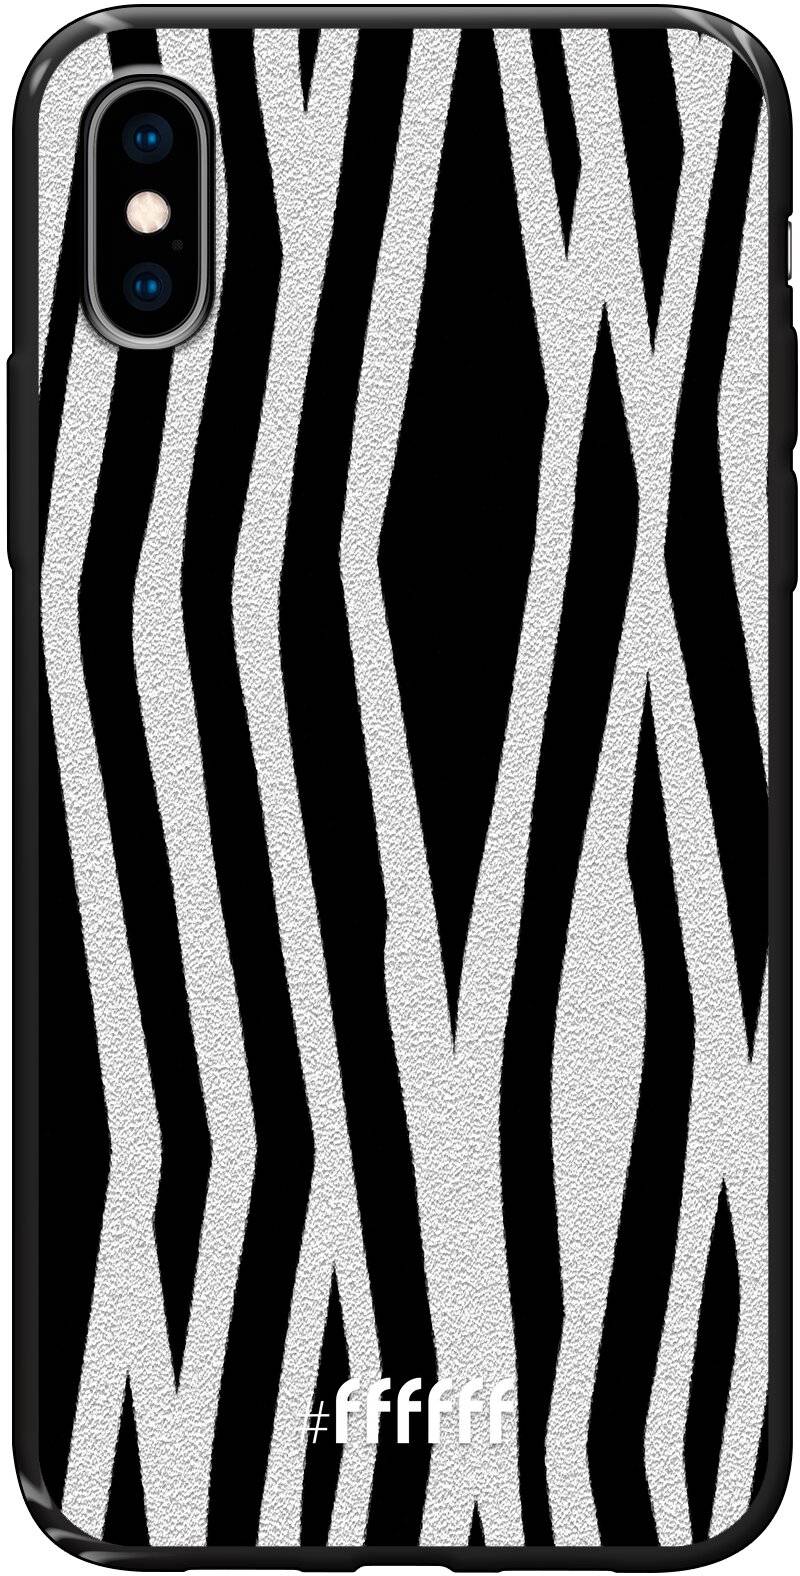 Zebra Print iPhone Xs